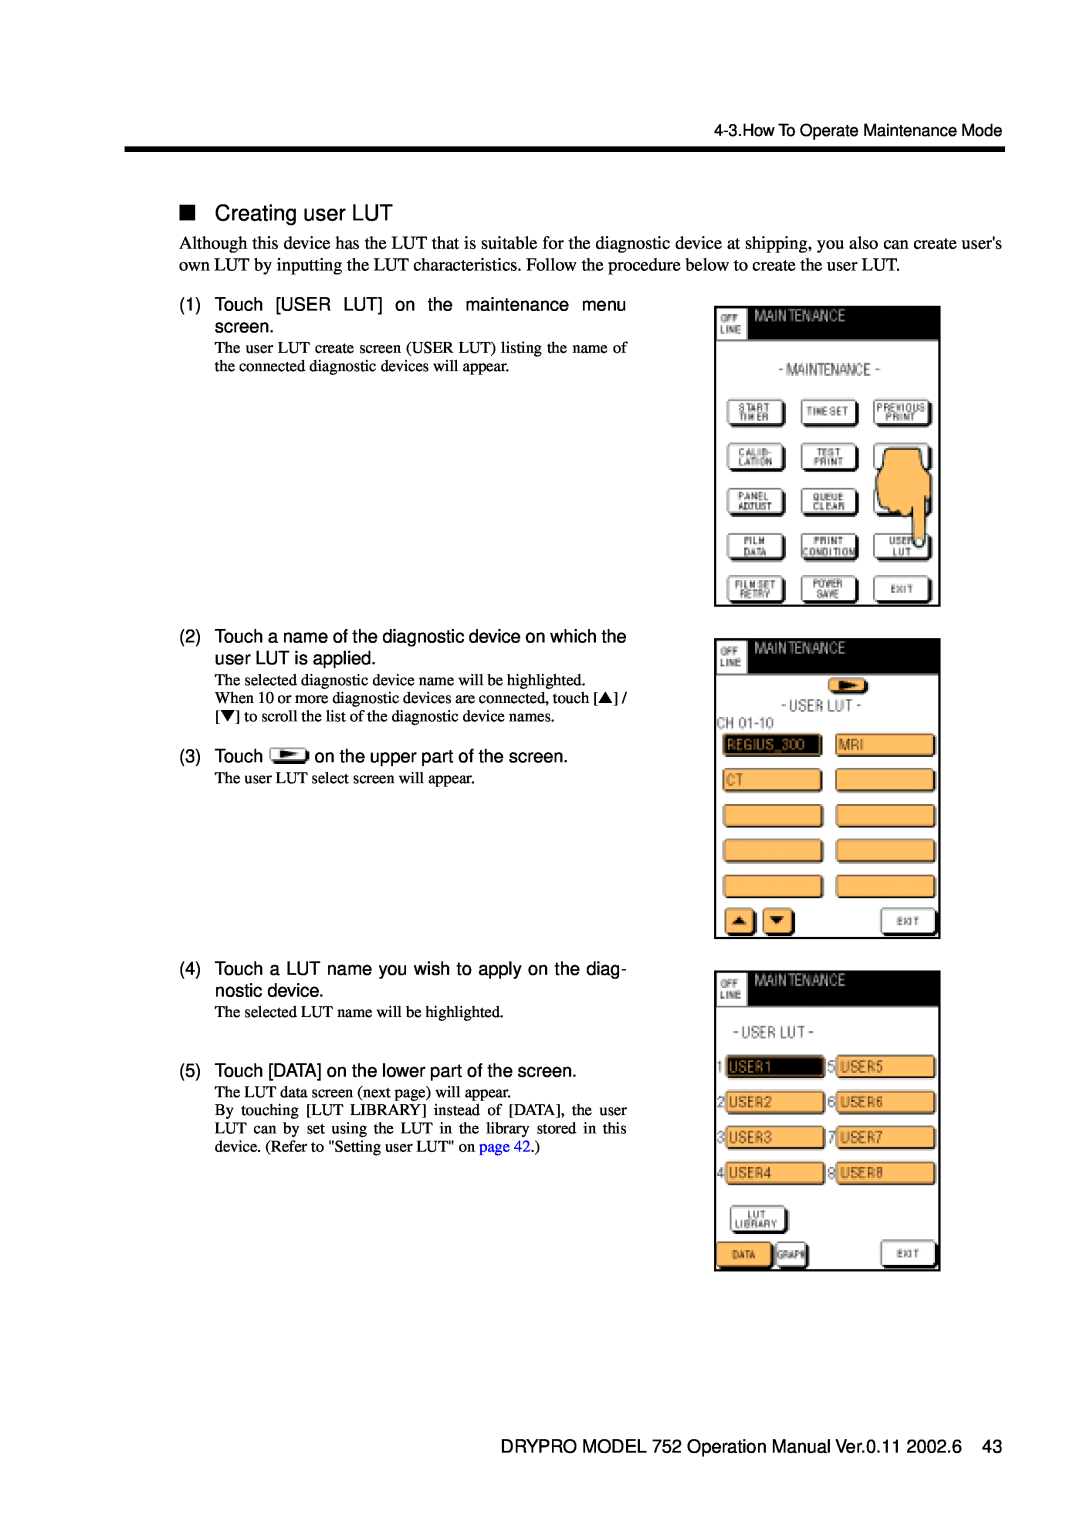 Konica Minolta 752 operation manual Creating user LUT 